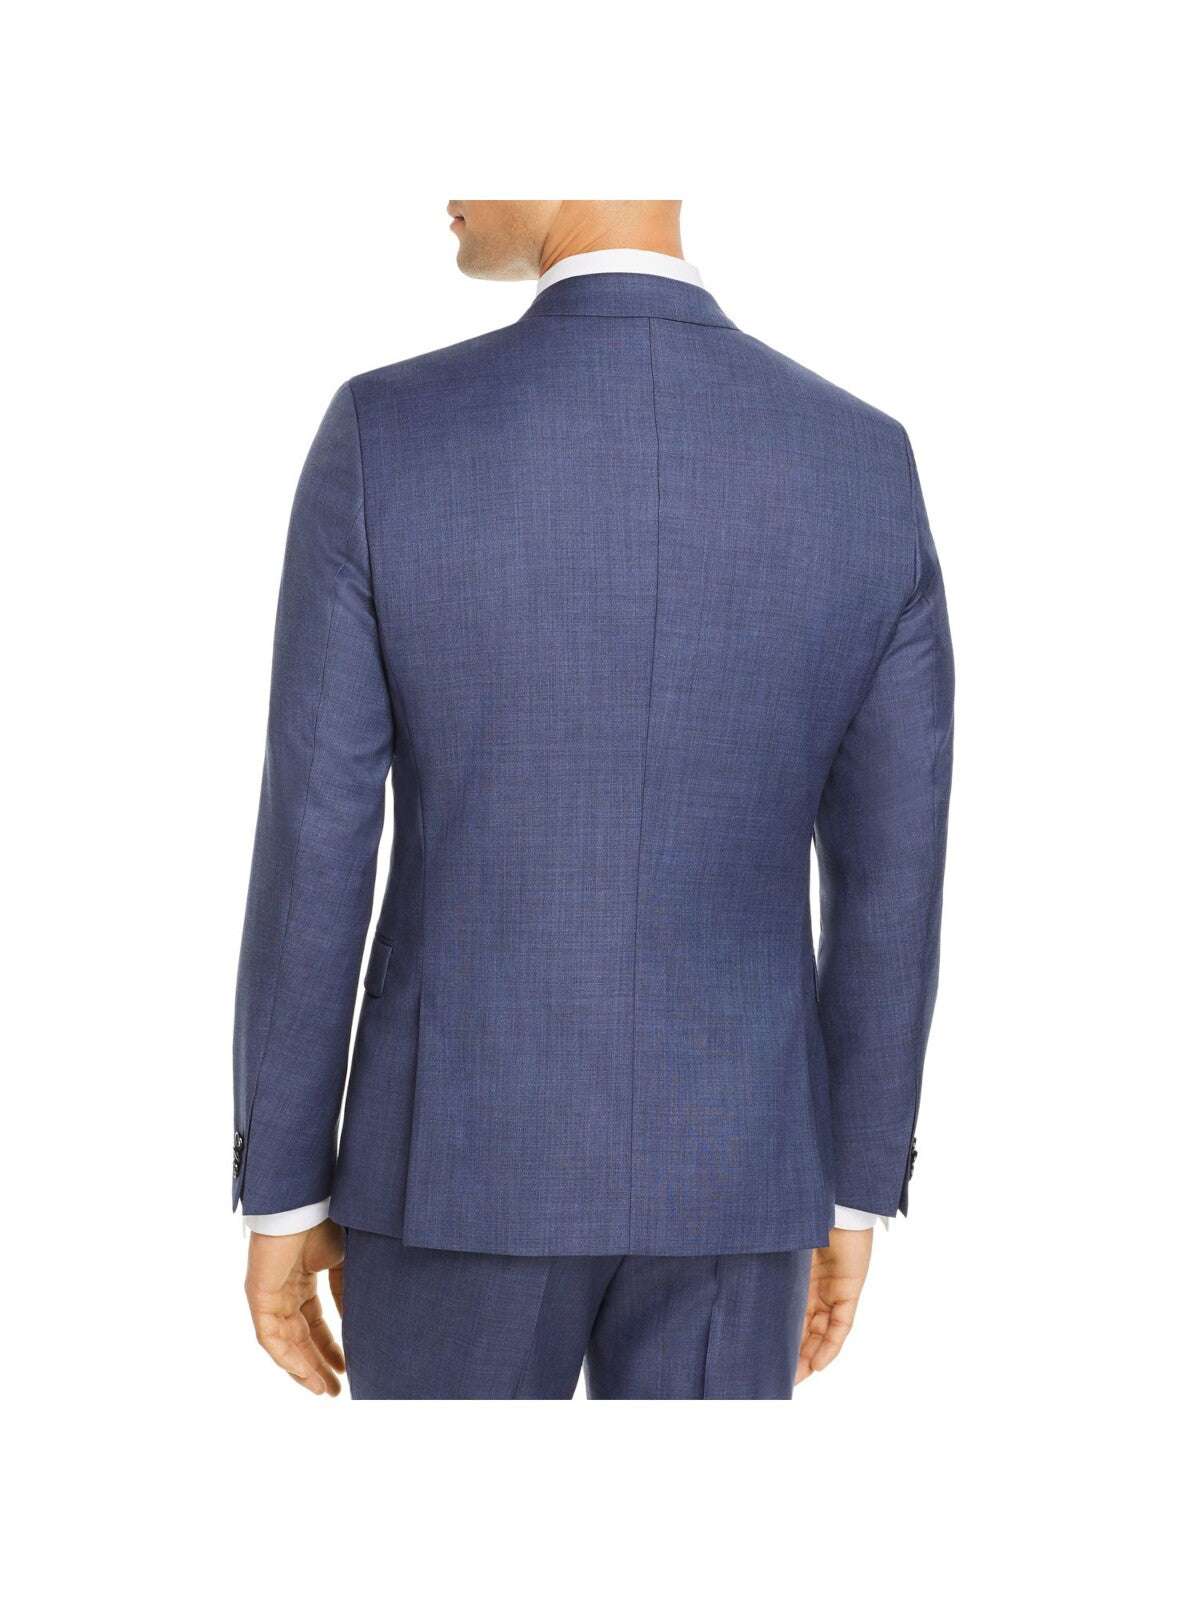 HUGO BOSS Mens Sharkskin Blue Single Breasted, Patterned Extra Slim Fit Wool Blend Blazer 44R